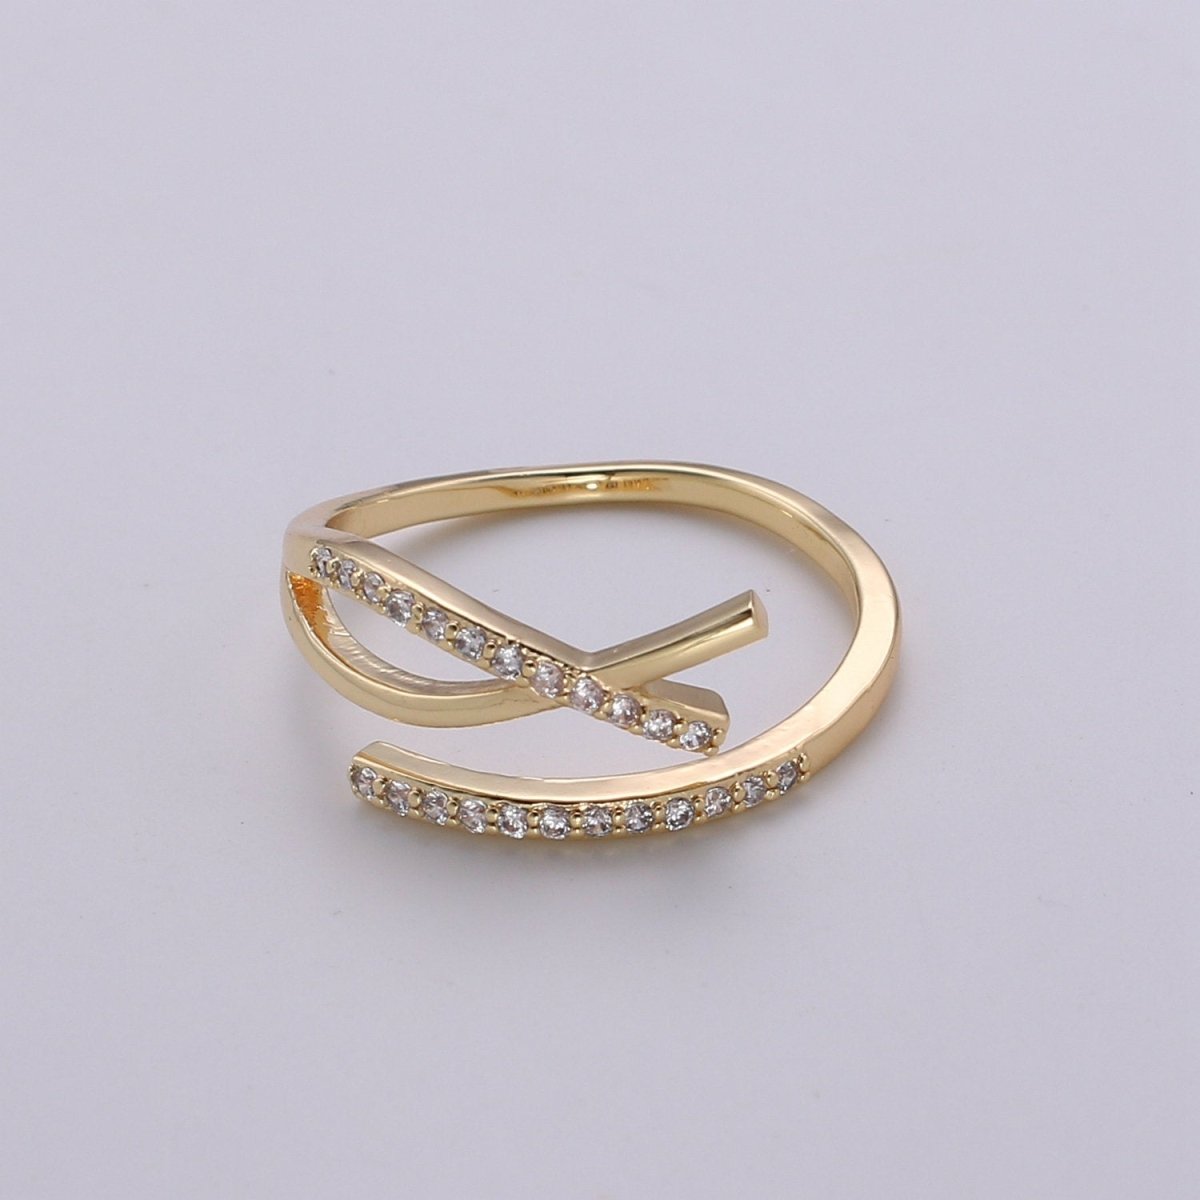 Cz Fish Ring, Chritianity Symbol Fish Ring, Silver Ichthus Ichthus Fish Ring, Christians Ring, Gold Vermeil Christian Symbol Jewelry R-145 - DLUXCA